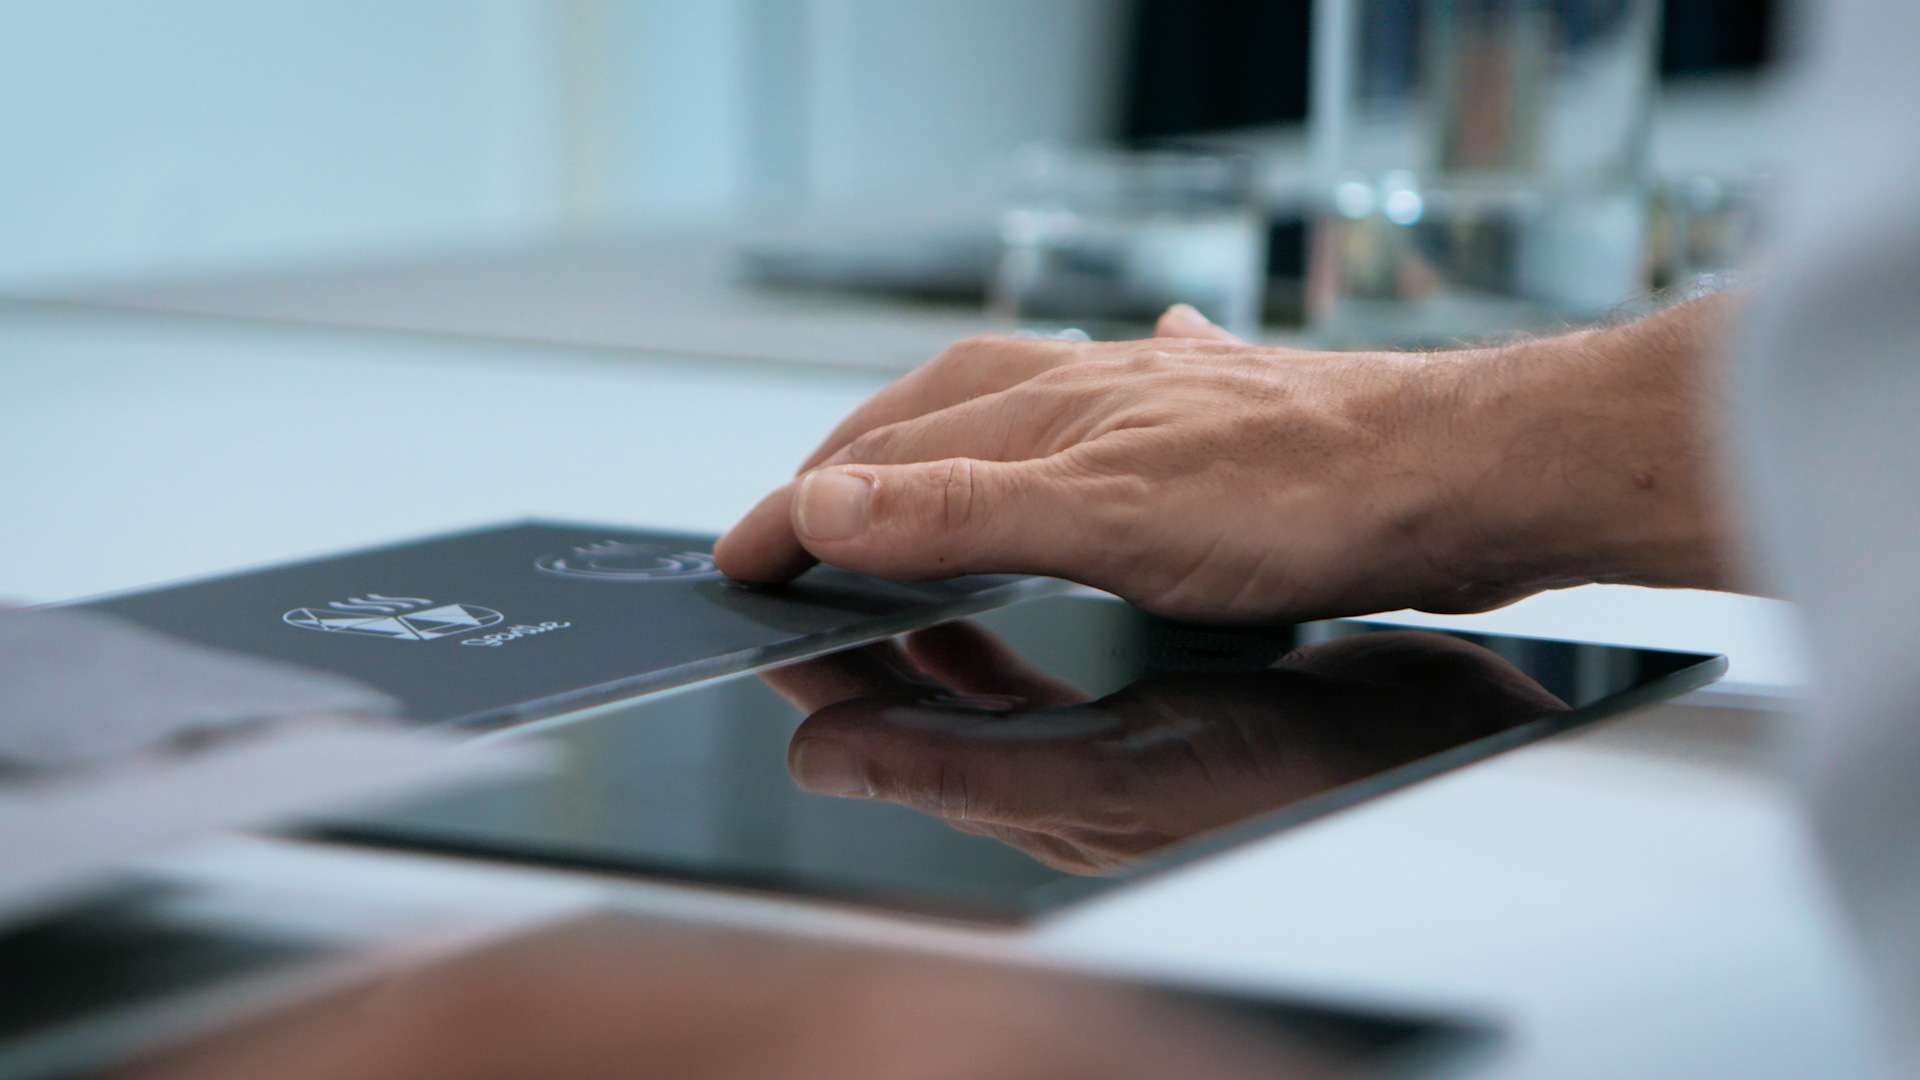 Hand touching glass panel in modern kitchen demonstrating haptic feedback